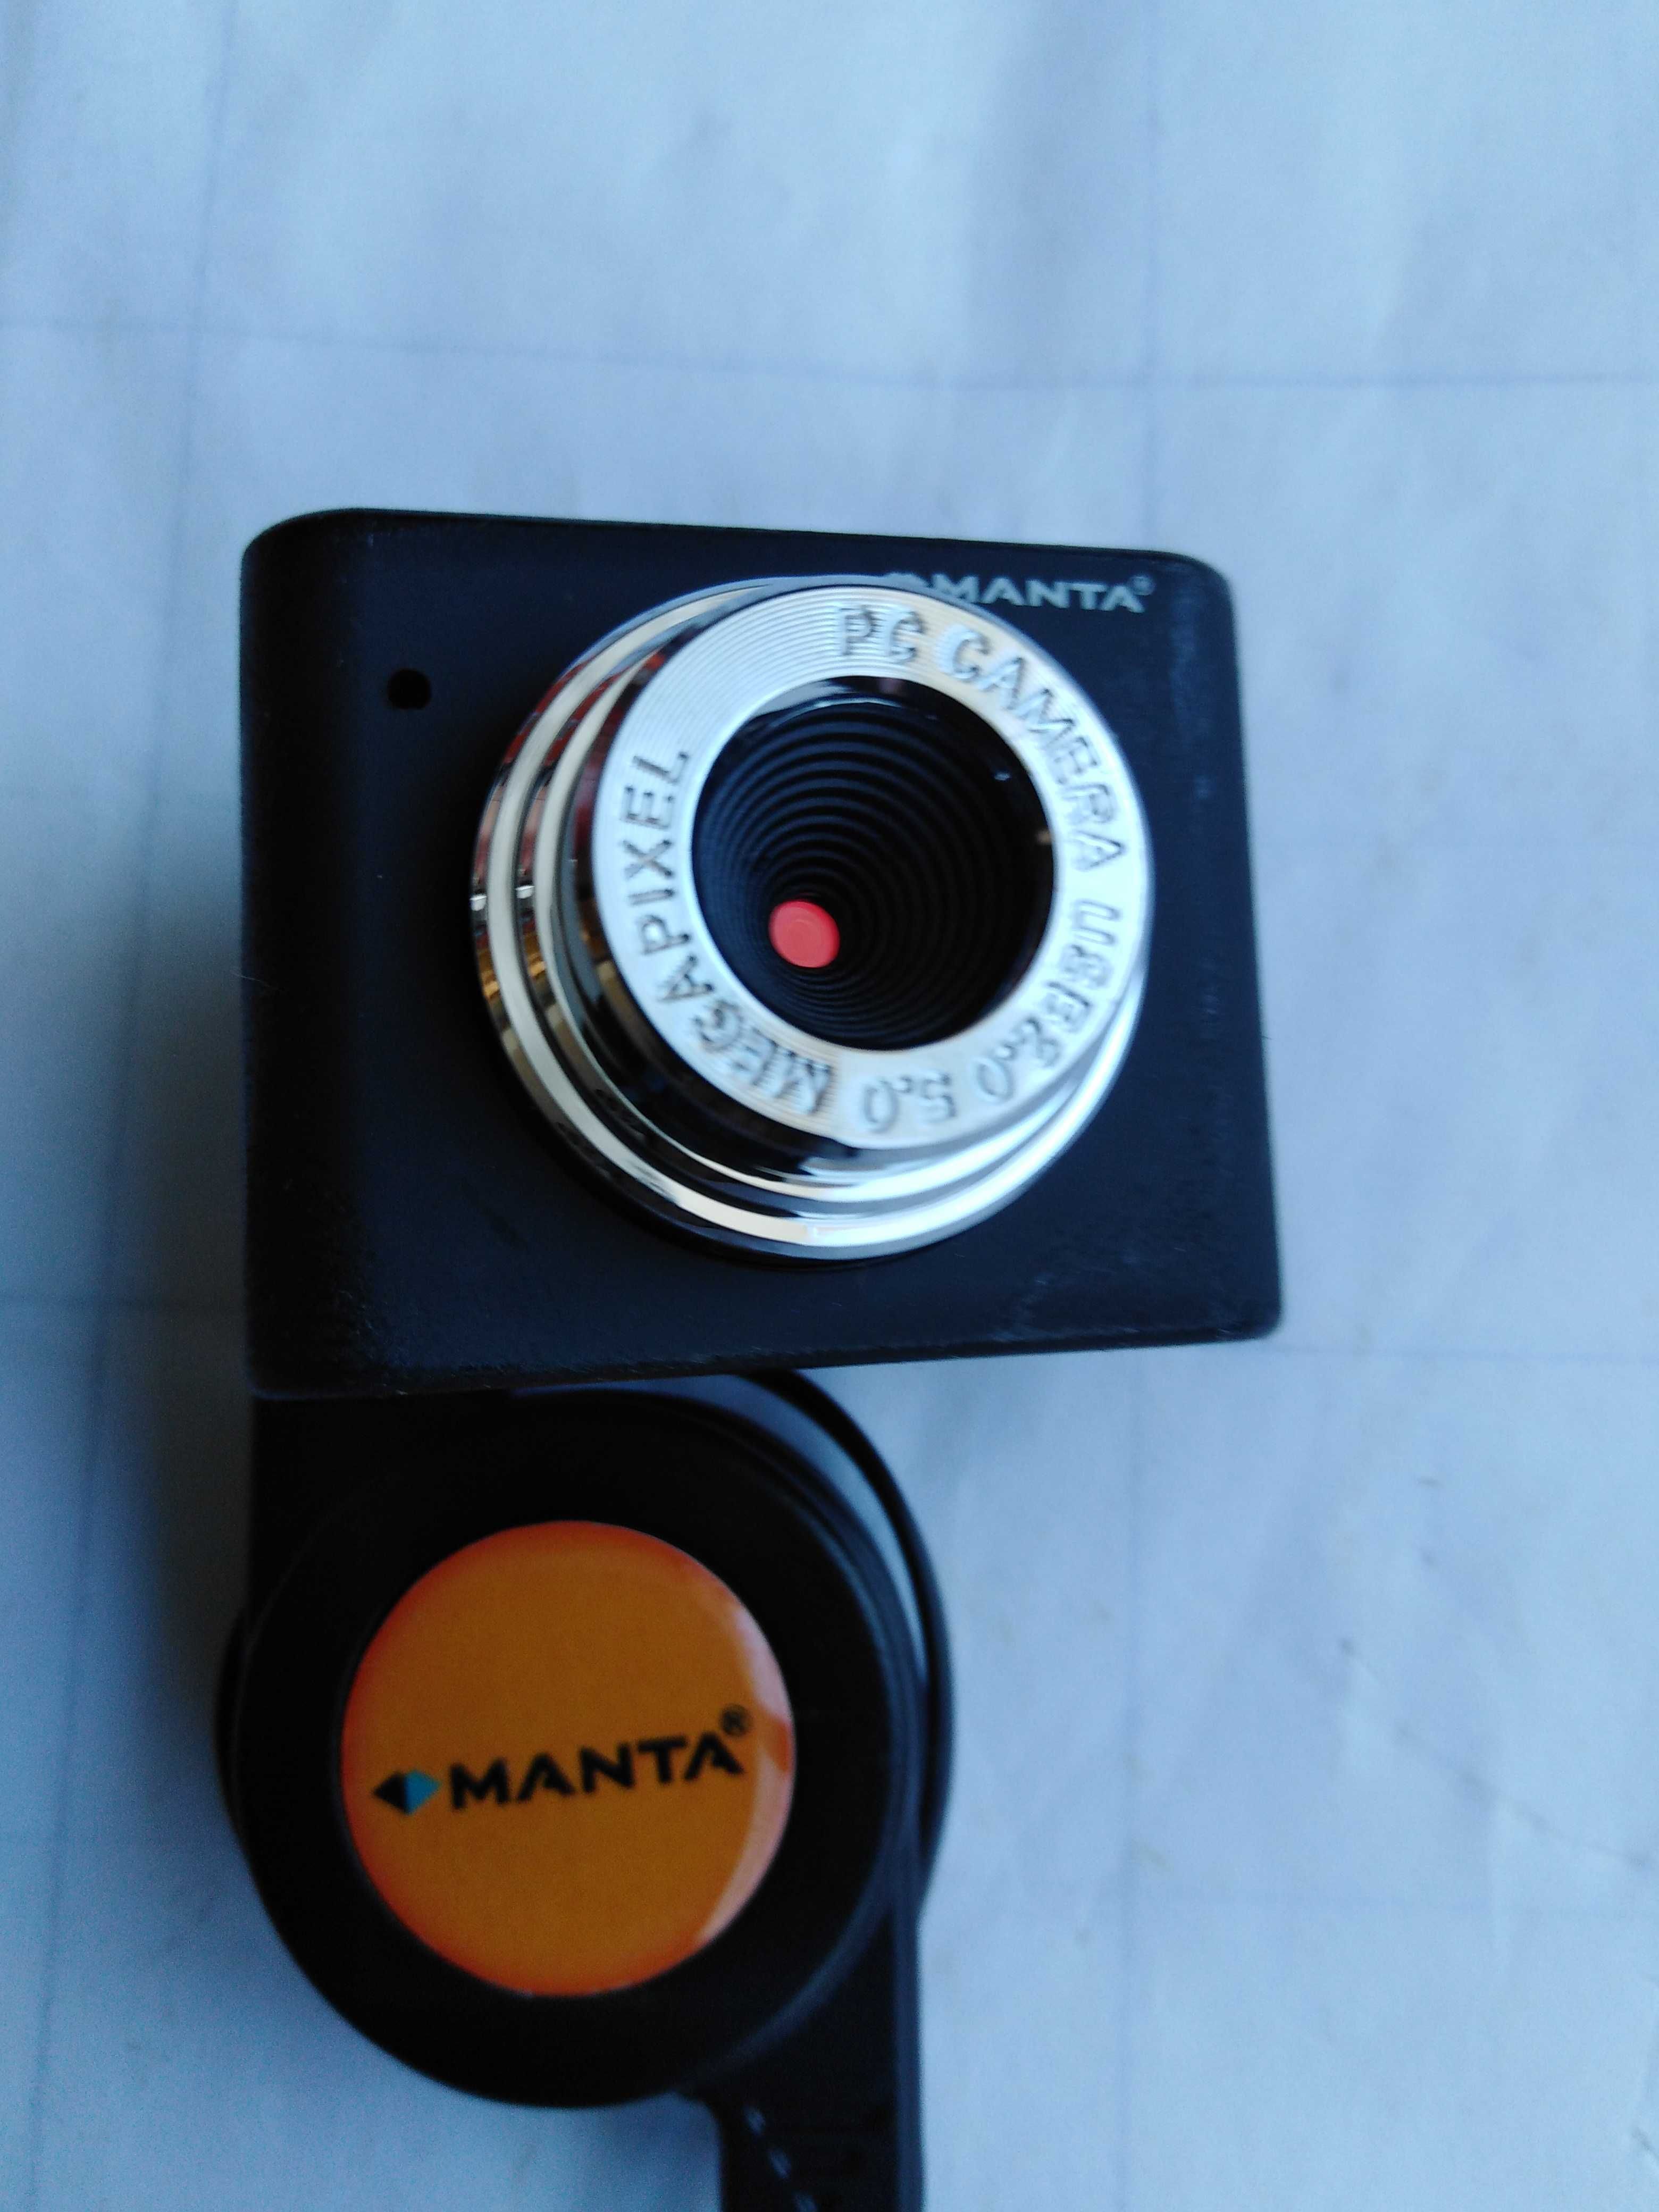 Manta MM352 – kamera zewnętrzna do komputera